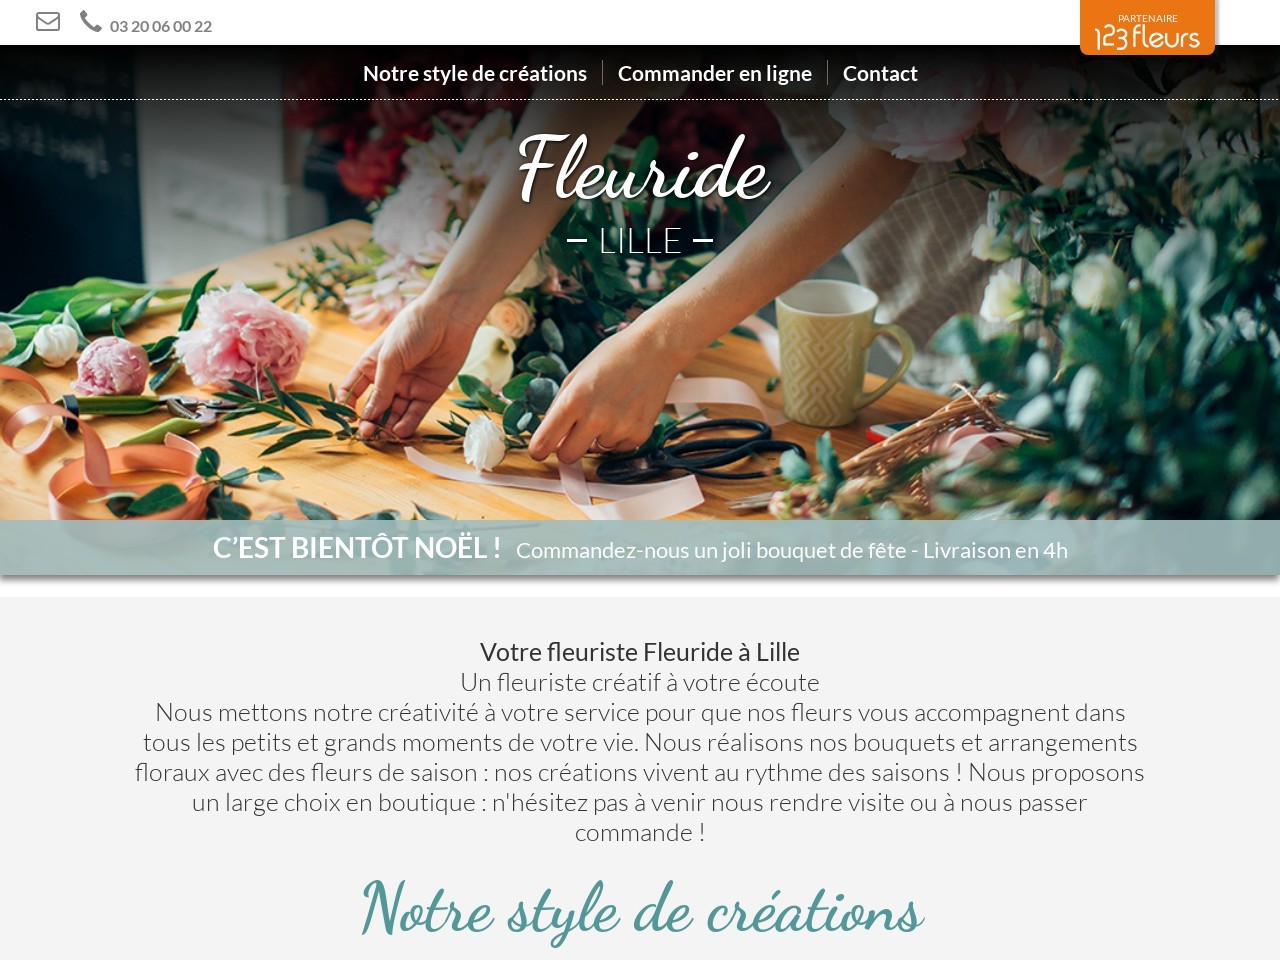 Site fleuriste Fleuride - 123fleurs